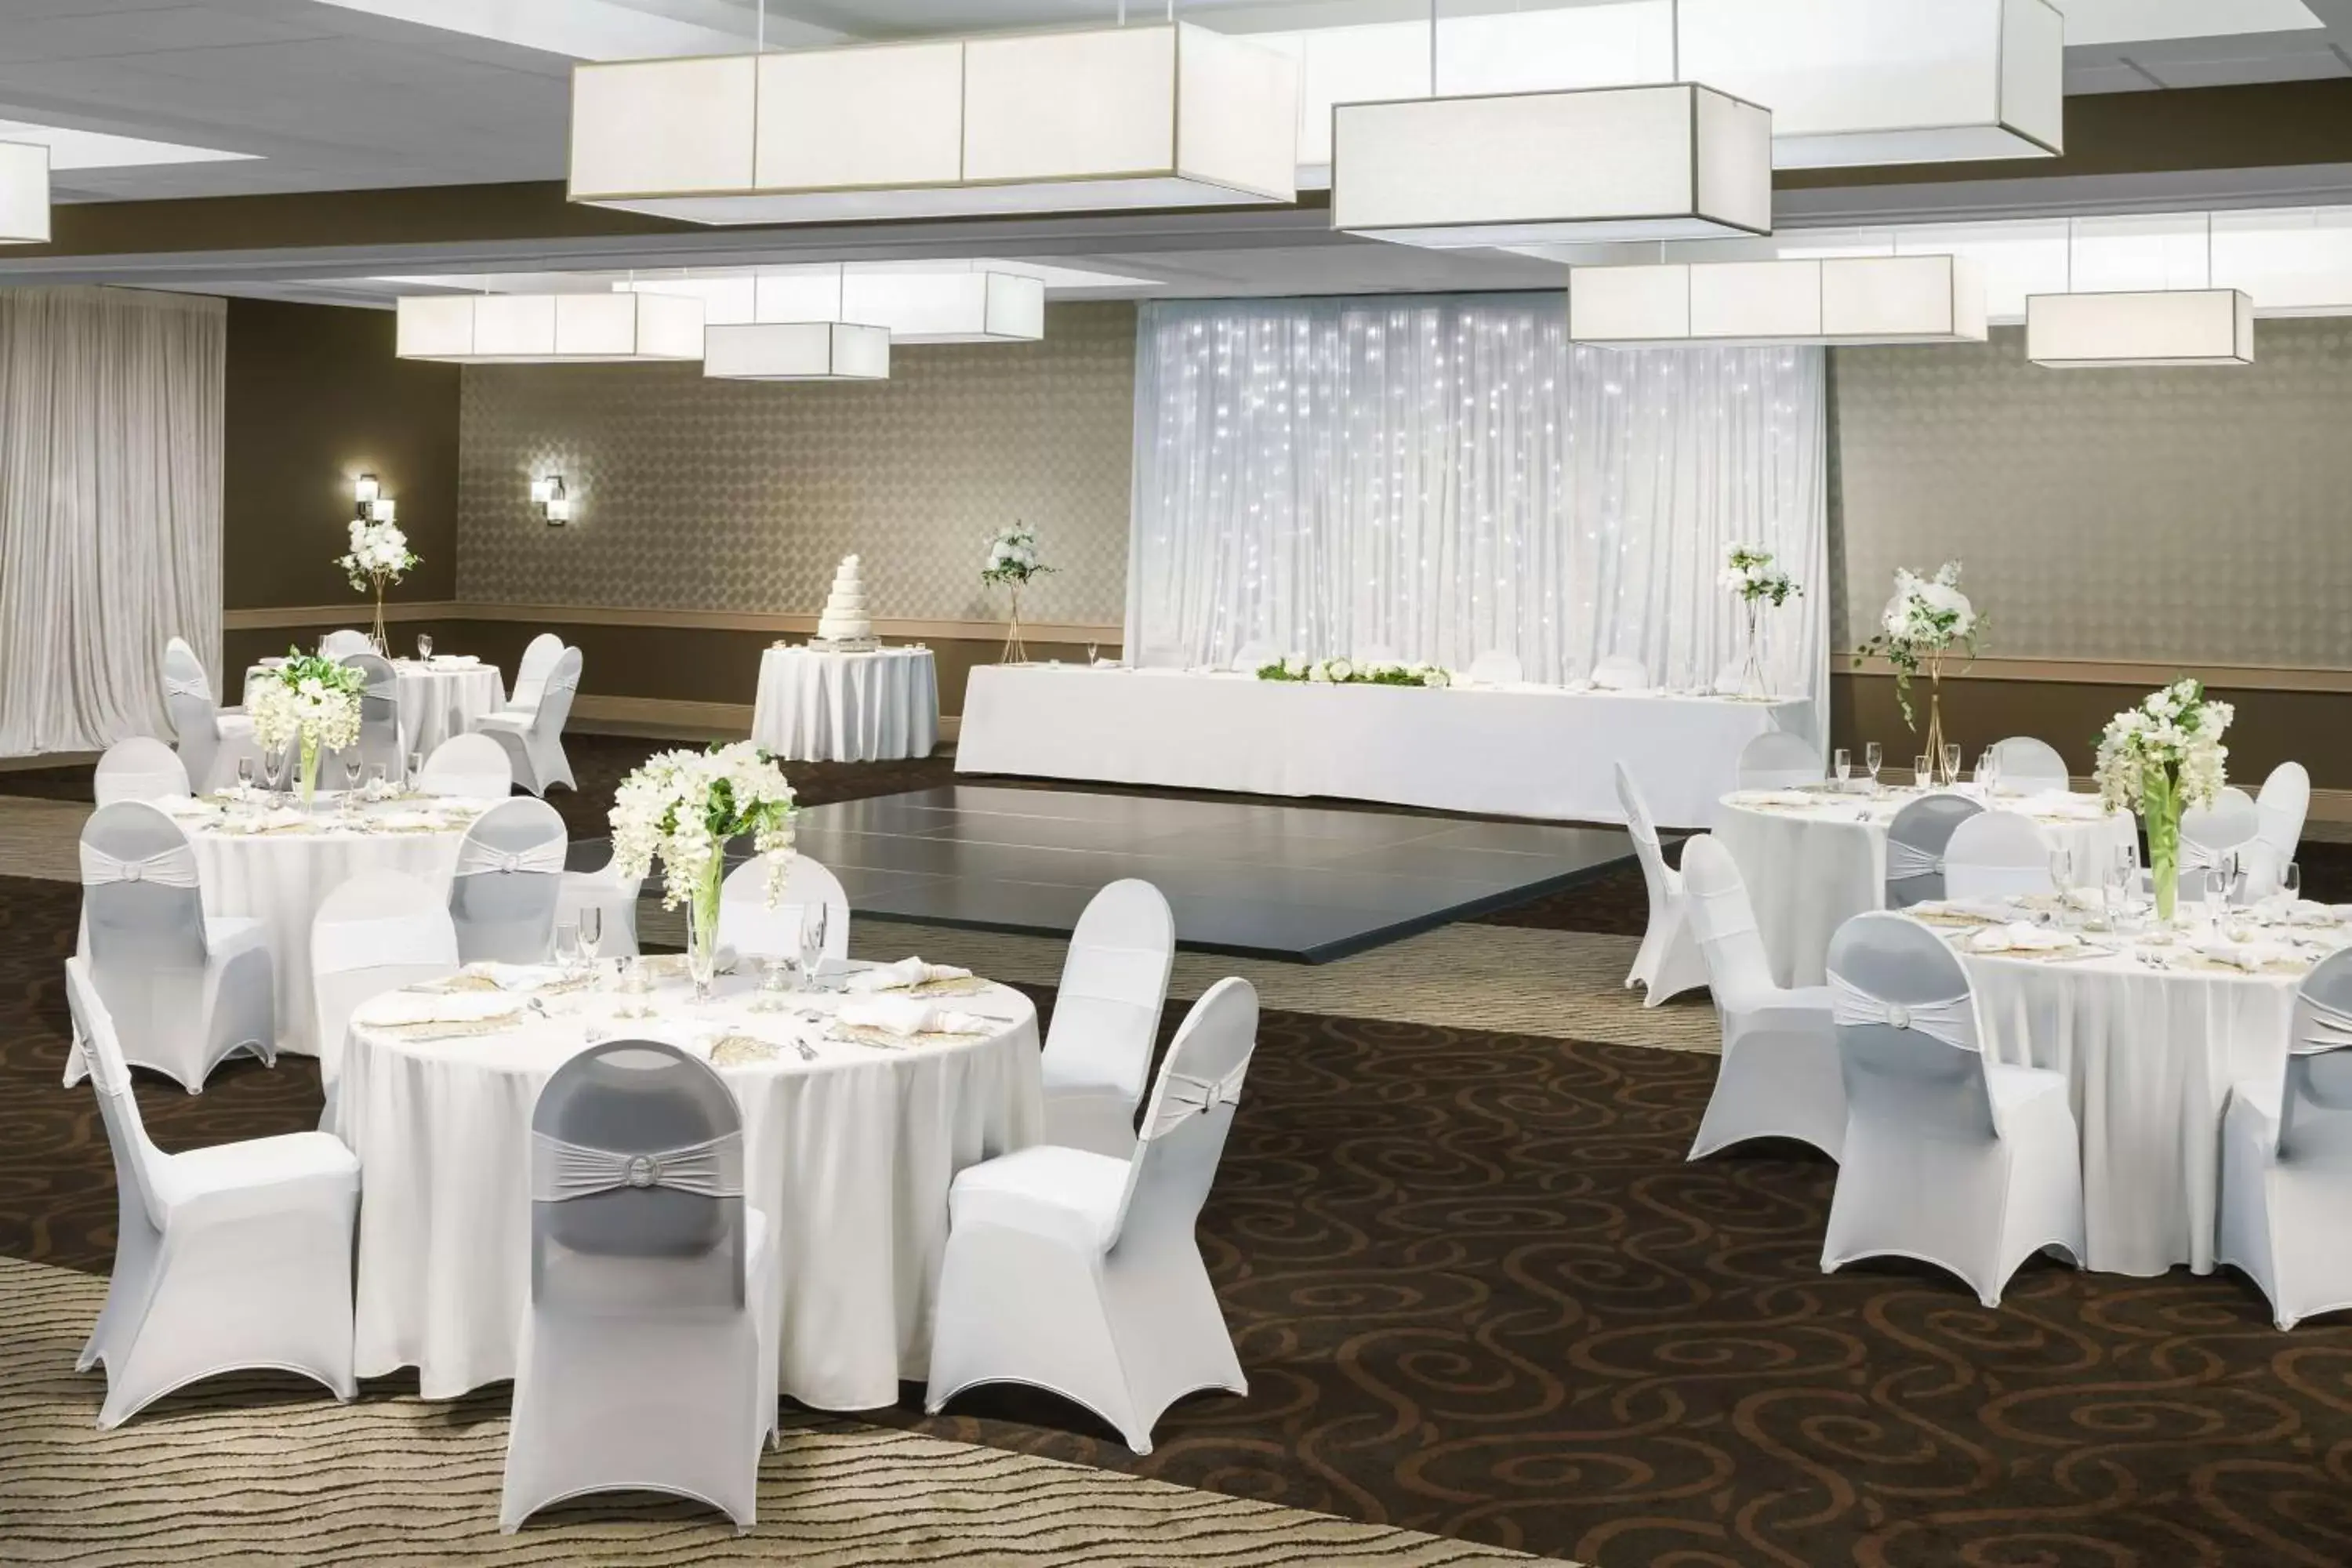 Meeting/conference room, Banquet Facilities in Hilton Garden Inn Cocoa Beach-Oceanfront, FL